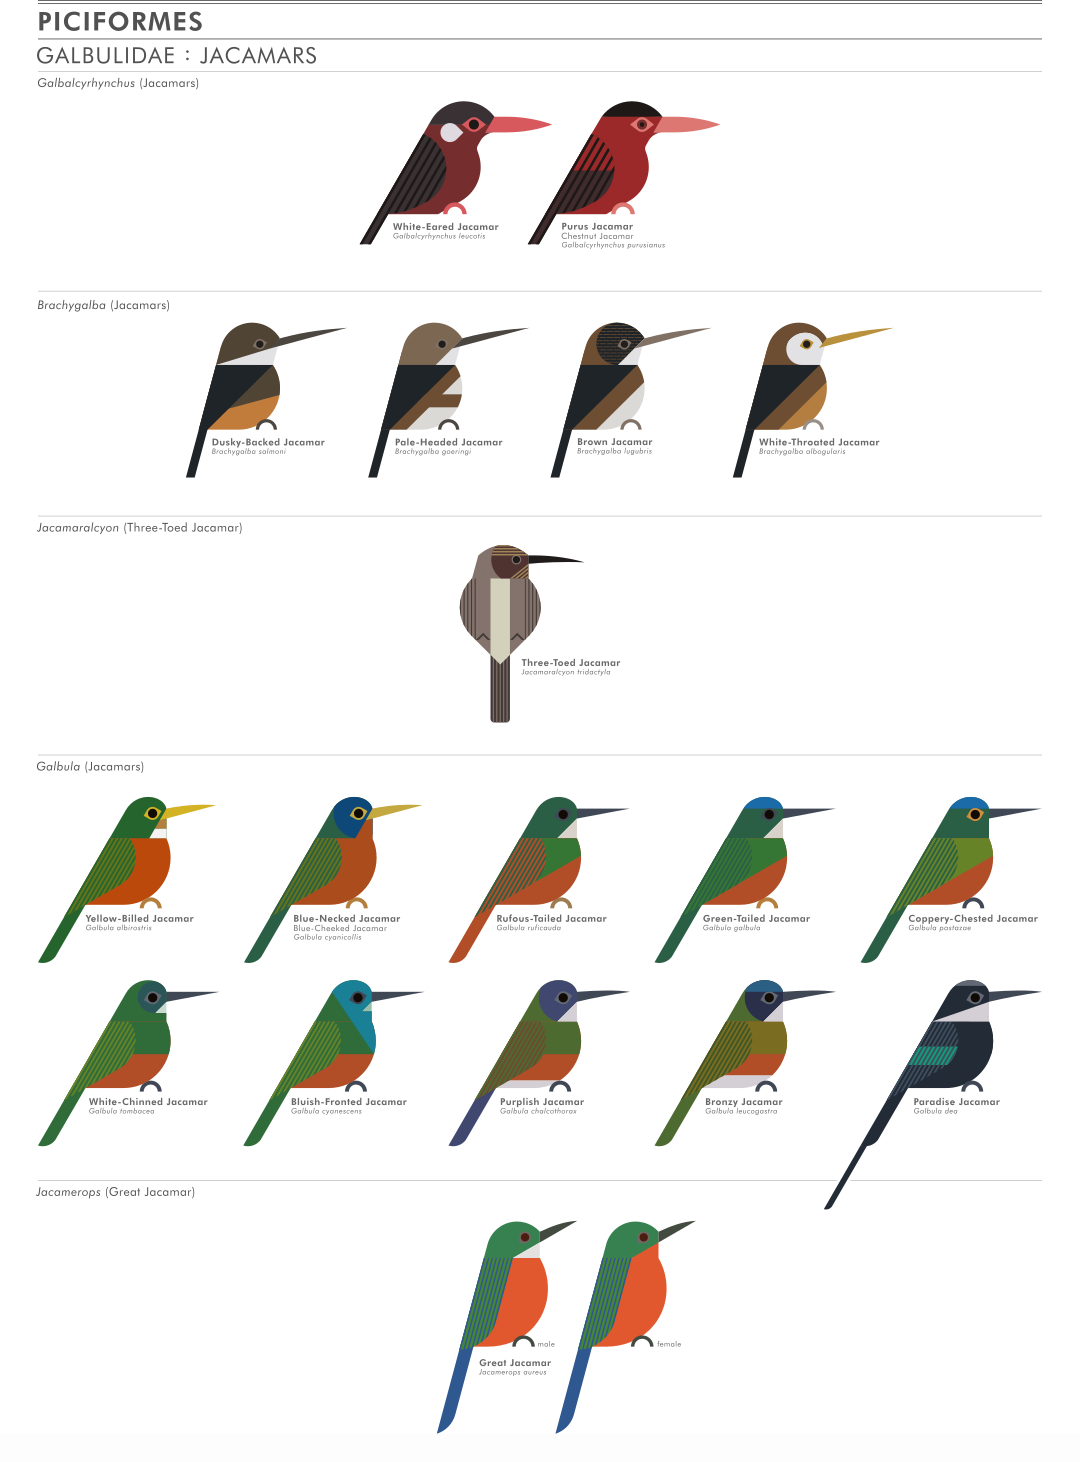 scott partridge - ave - avian vector encyclopedia - jacamars galbulidae piciformes - vector bird art